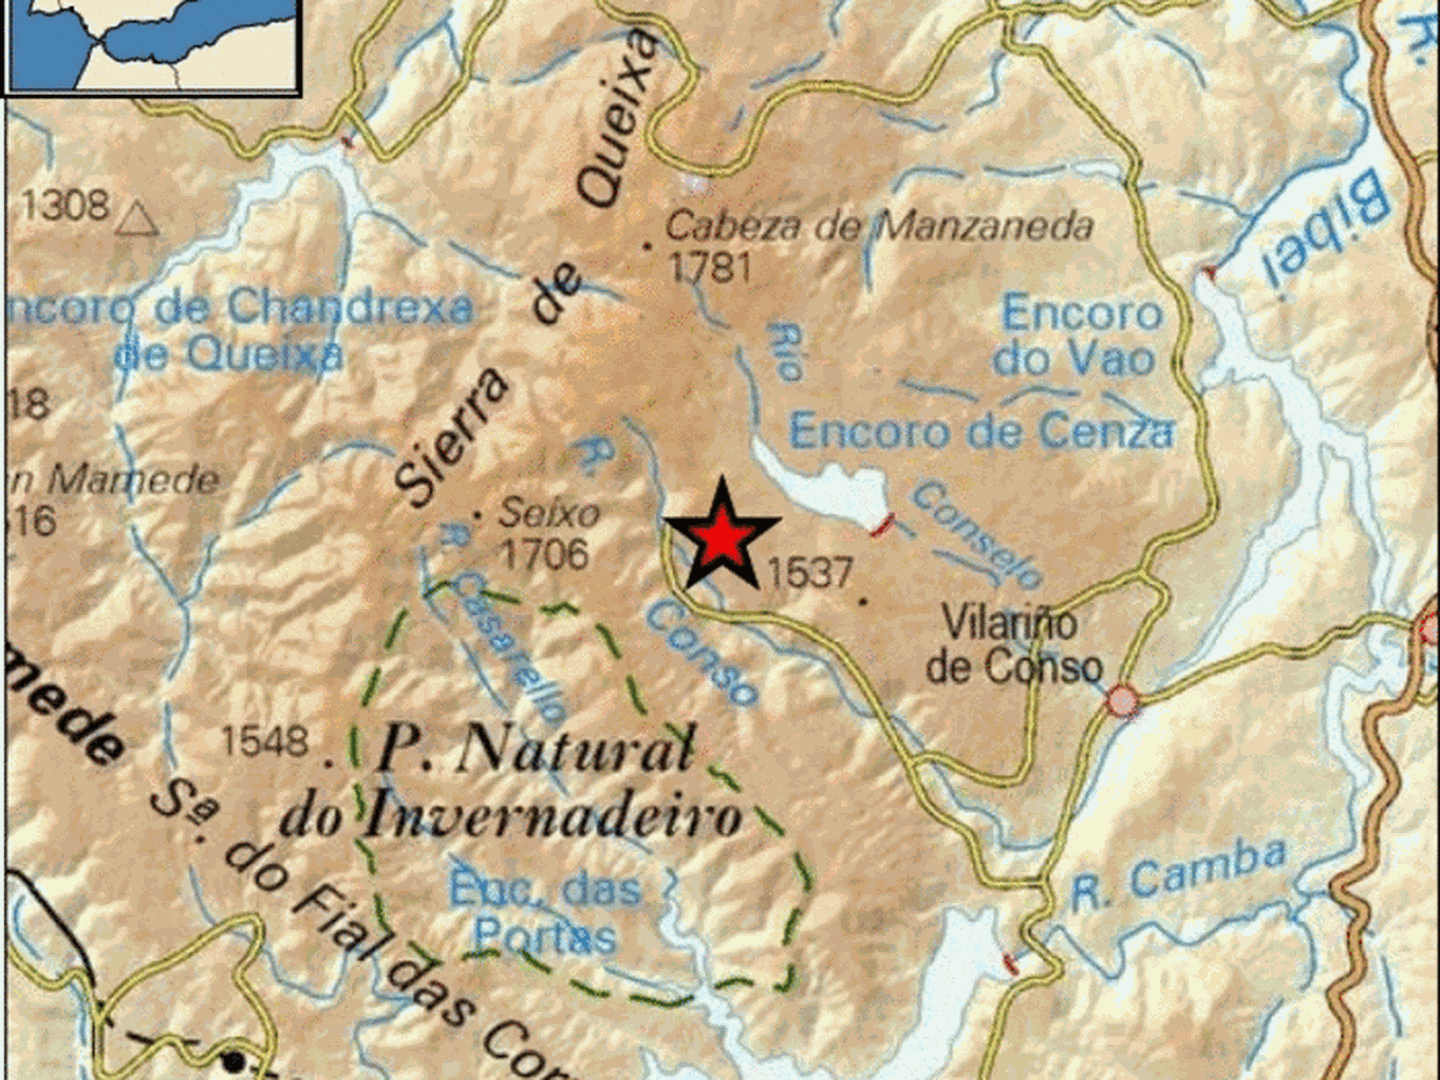 Epicentro del terremoto en las proximidades de Chandrexa de Queixa. (IGN)